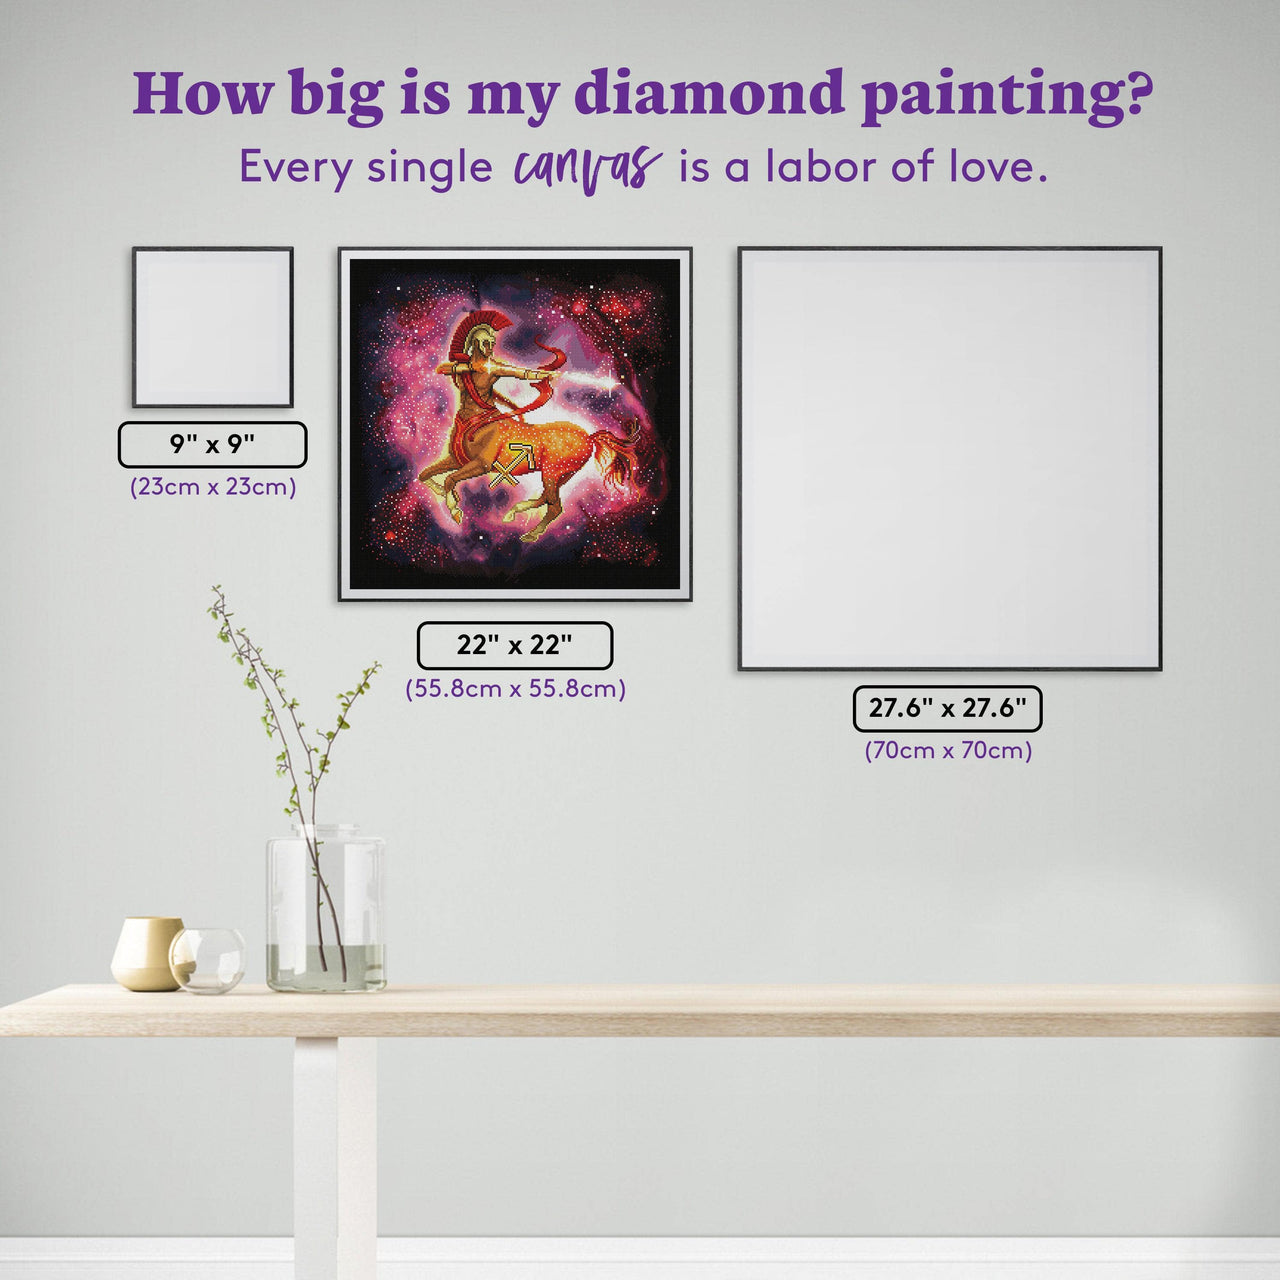 Diamond Painting Sagittarius 22" x 22" (55.8cm x 55.8cm) / Square with 54 Colors including 3 ABs / 50,176